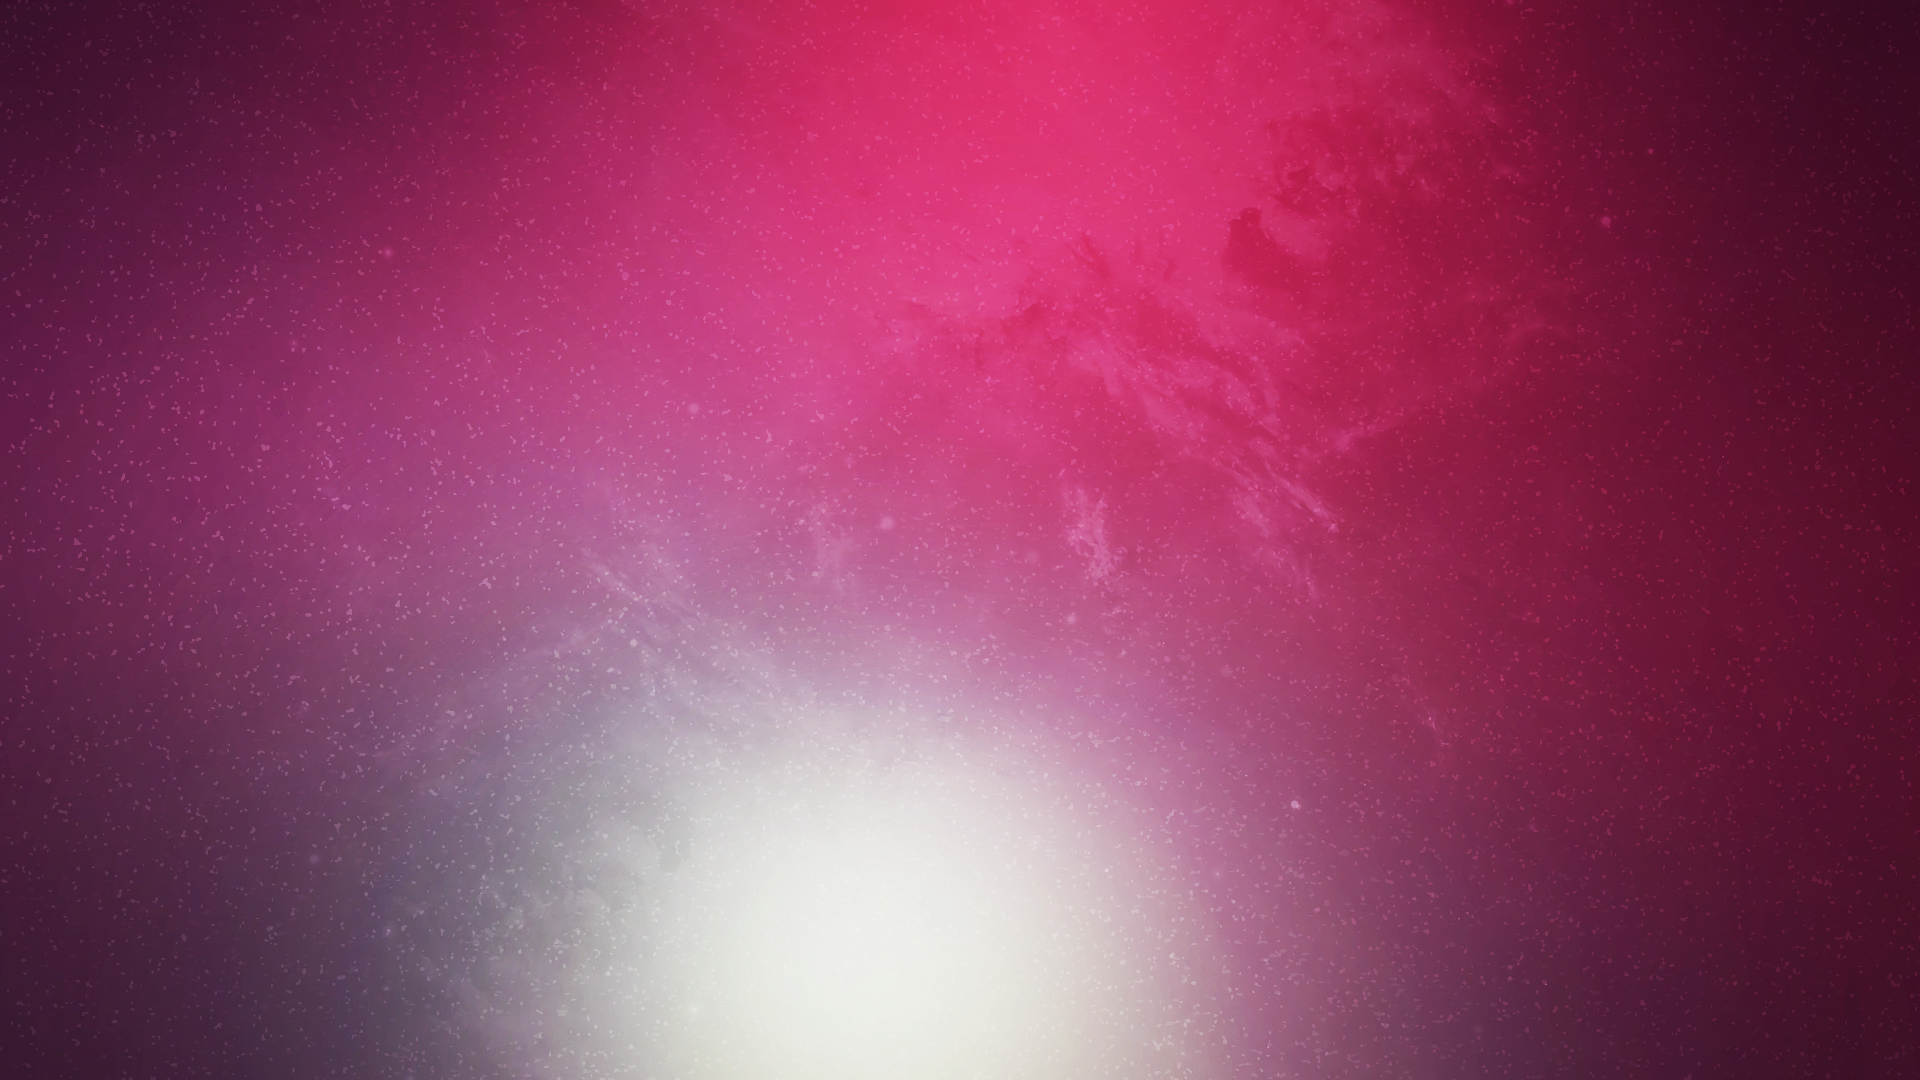 General 1920x1080 space haze purple abstract pink red stars digital art